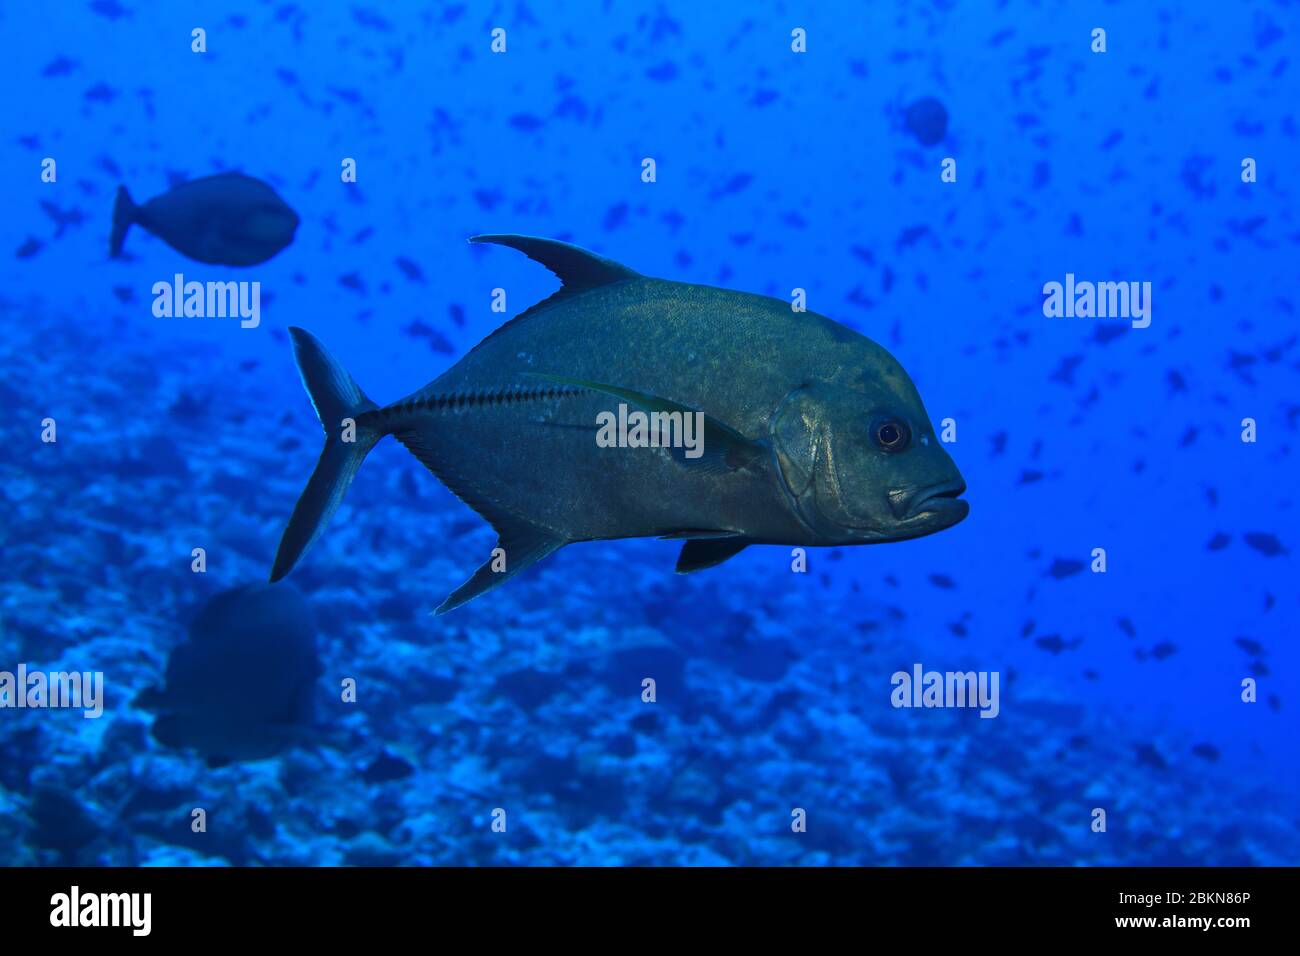 Black jack trevally fish (Caranx lugubris) underwater in tropical waters of the Indian Ocean Stock Photo